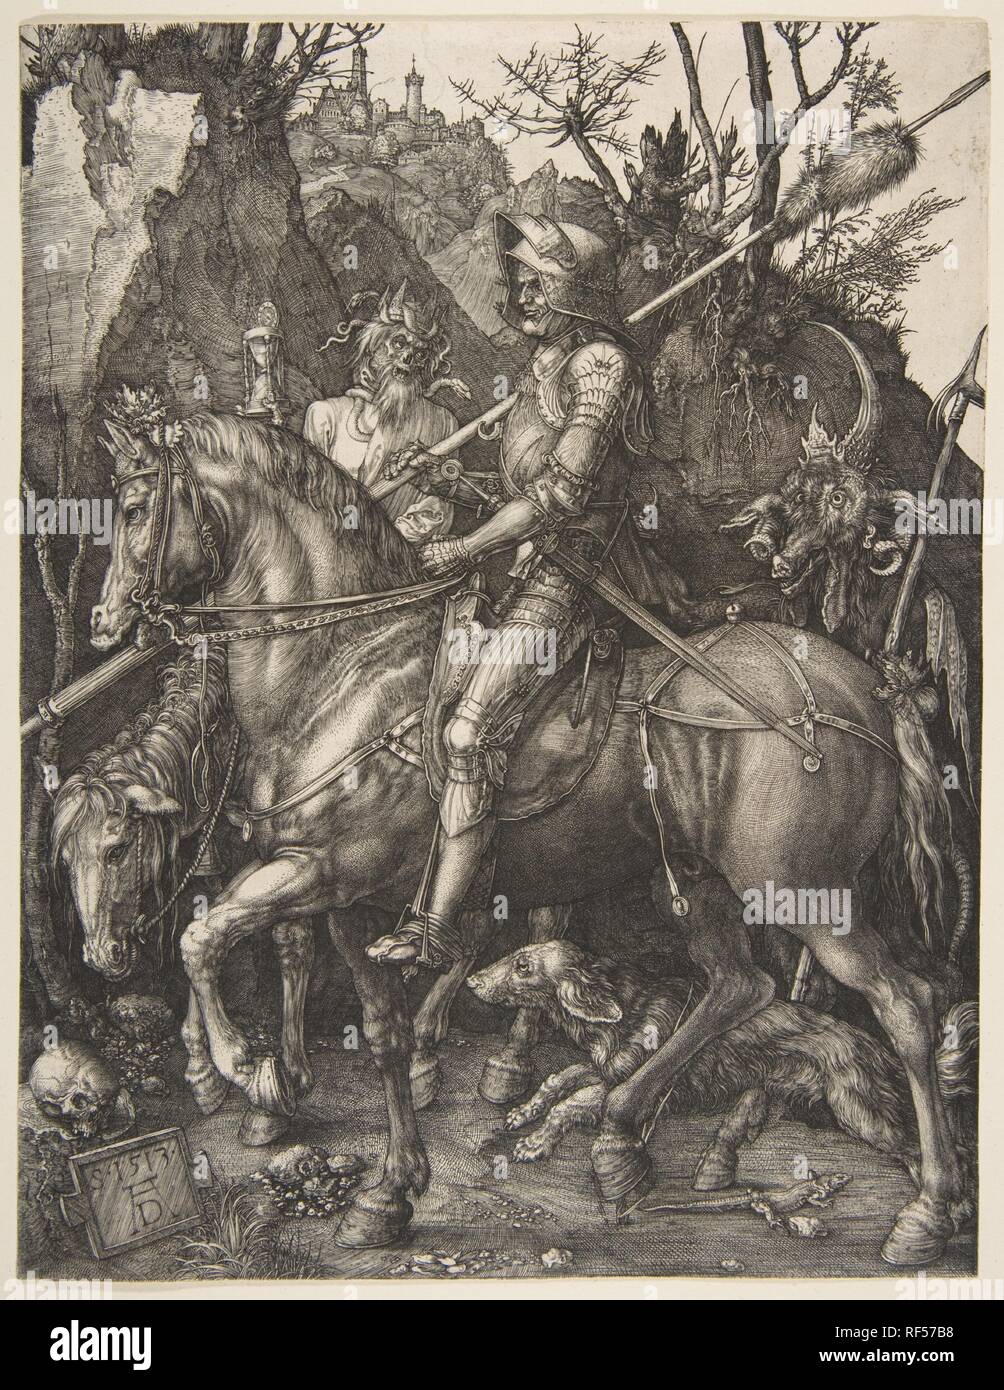 Knight, Death, and the Devil. Artist: Albrecht Dürer (German, Nuremberg 1471-1528 Nuremberg). Dimensions: sheet: 9 5/8 x 7 1/2 in. (24.5 x 19 cm). Date: 1513. Museum: Metropolitan Museum of Art, New York, USA. Stock Photo